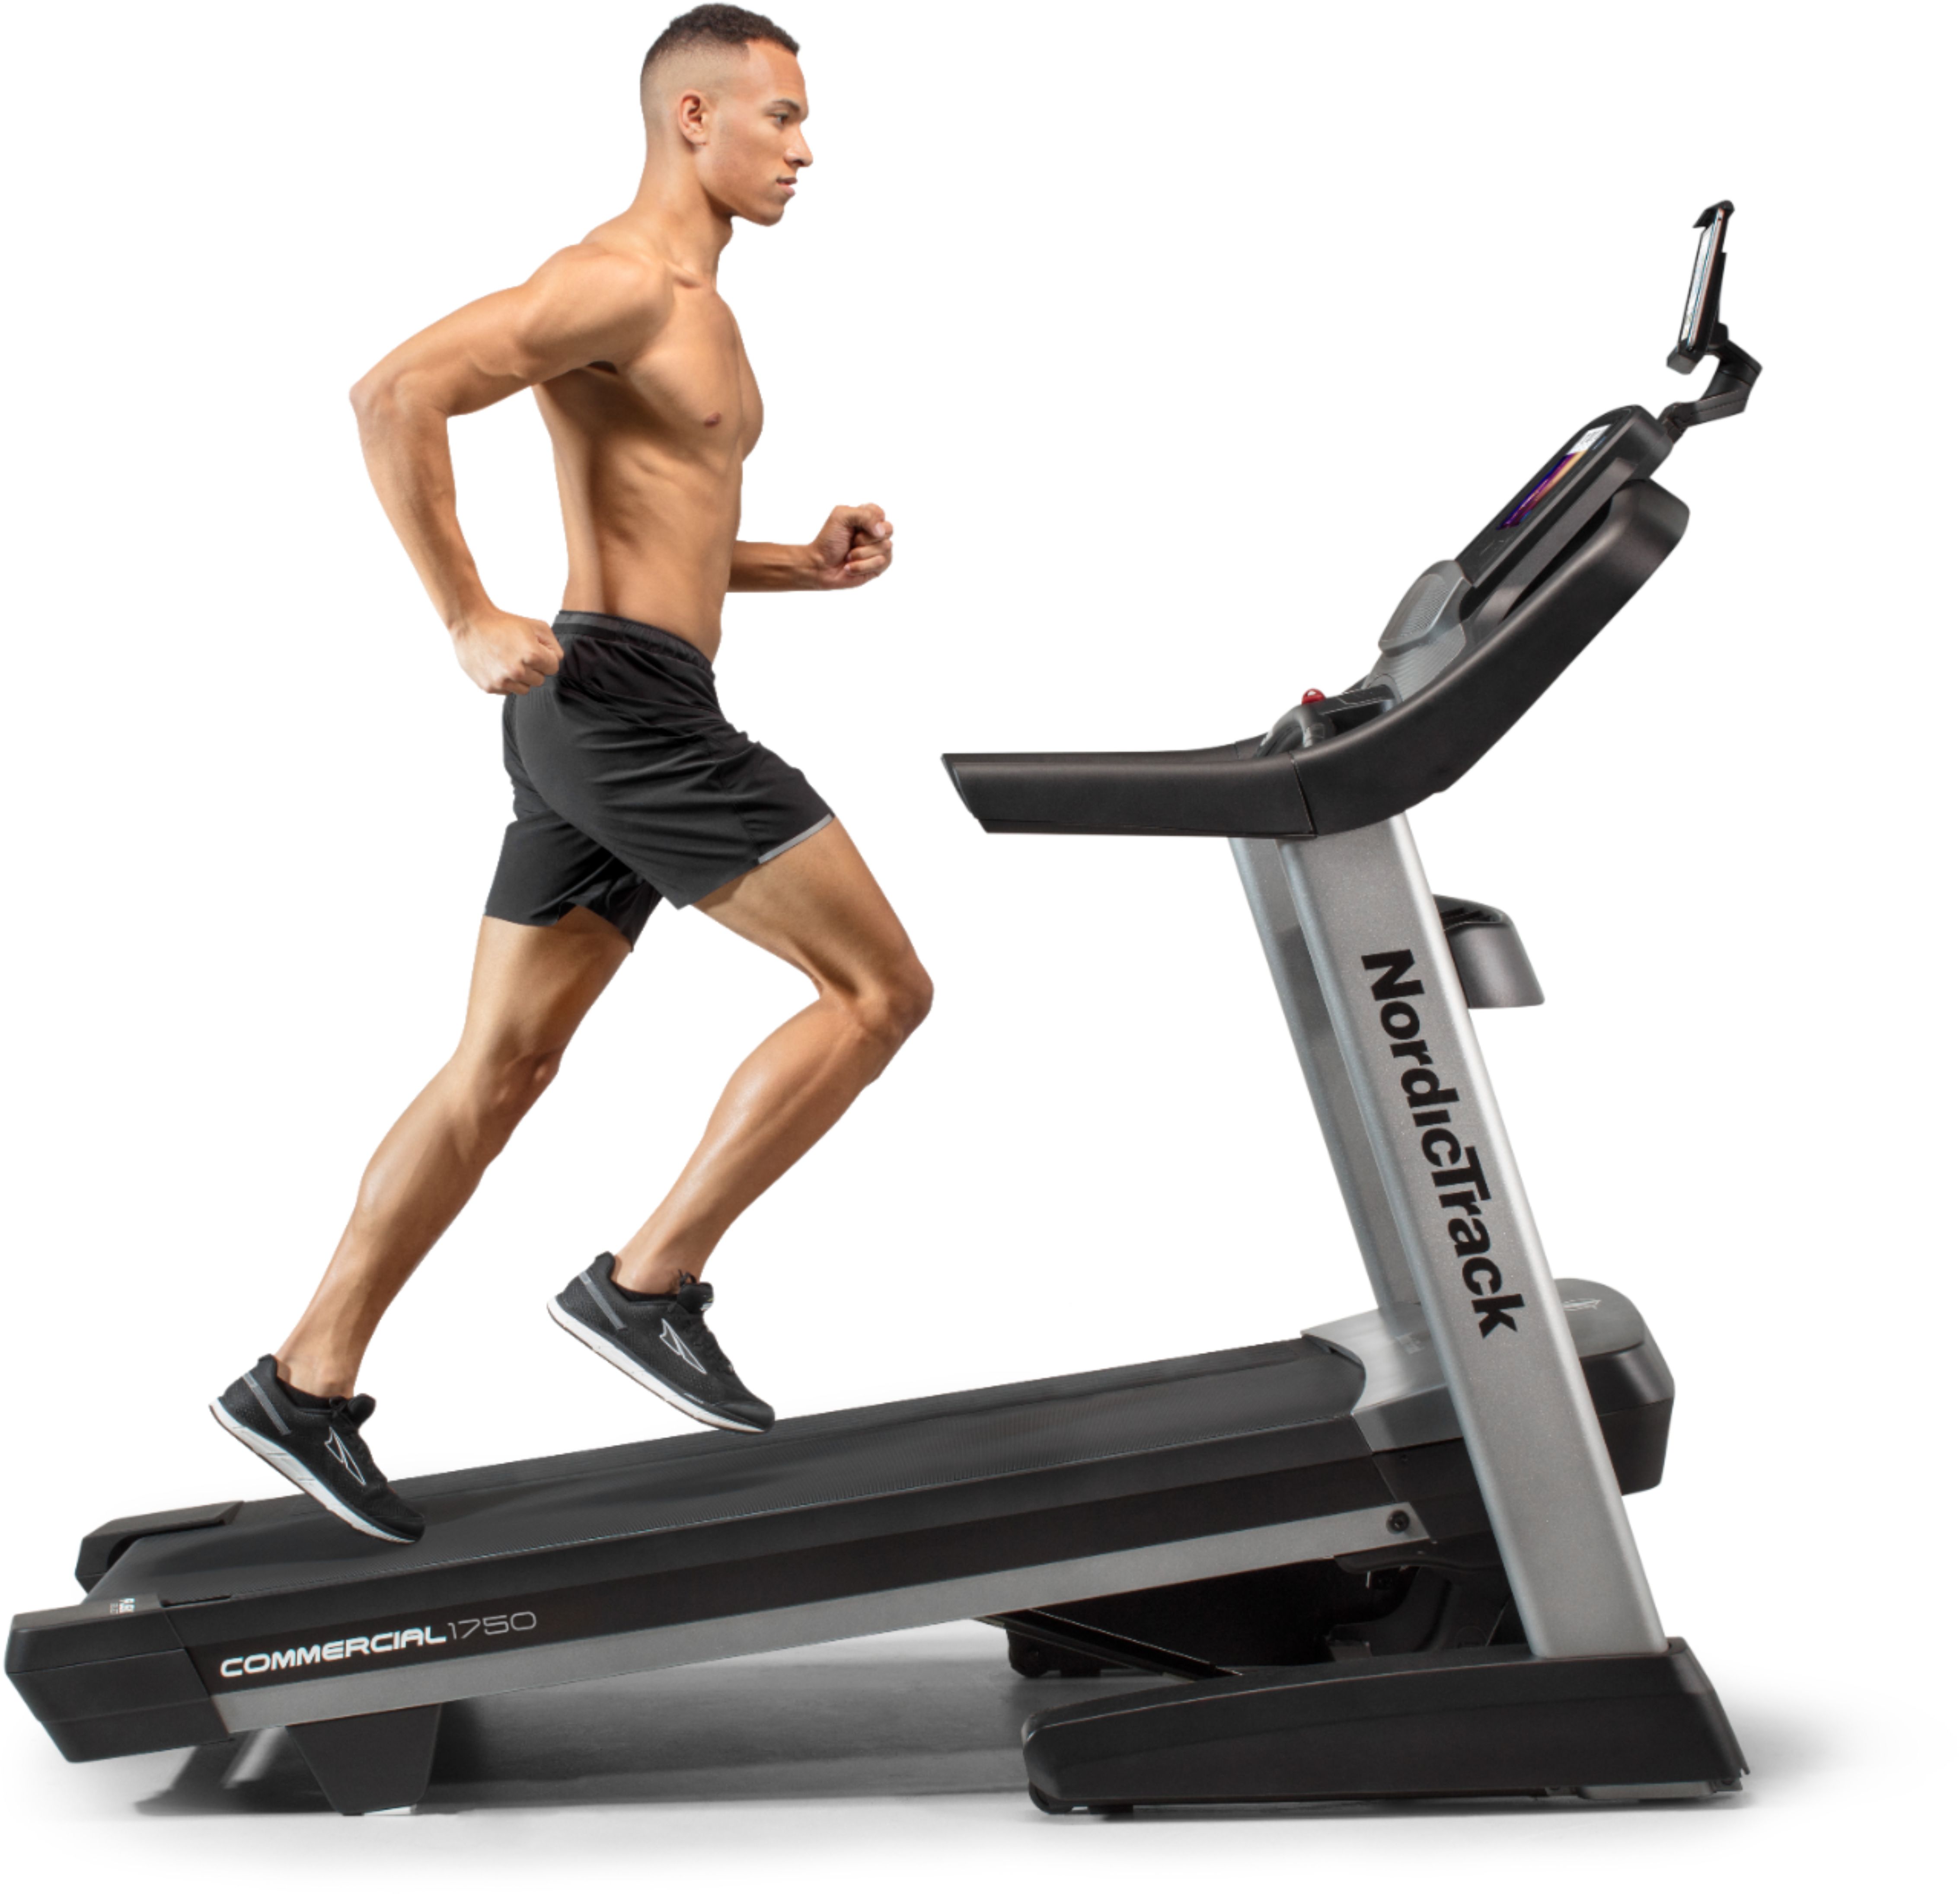 The treadmill test is a must 🤌 #BrooksVenice #LA #VeniceBeach